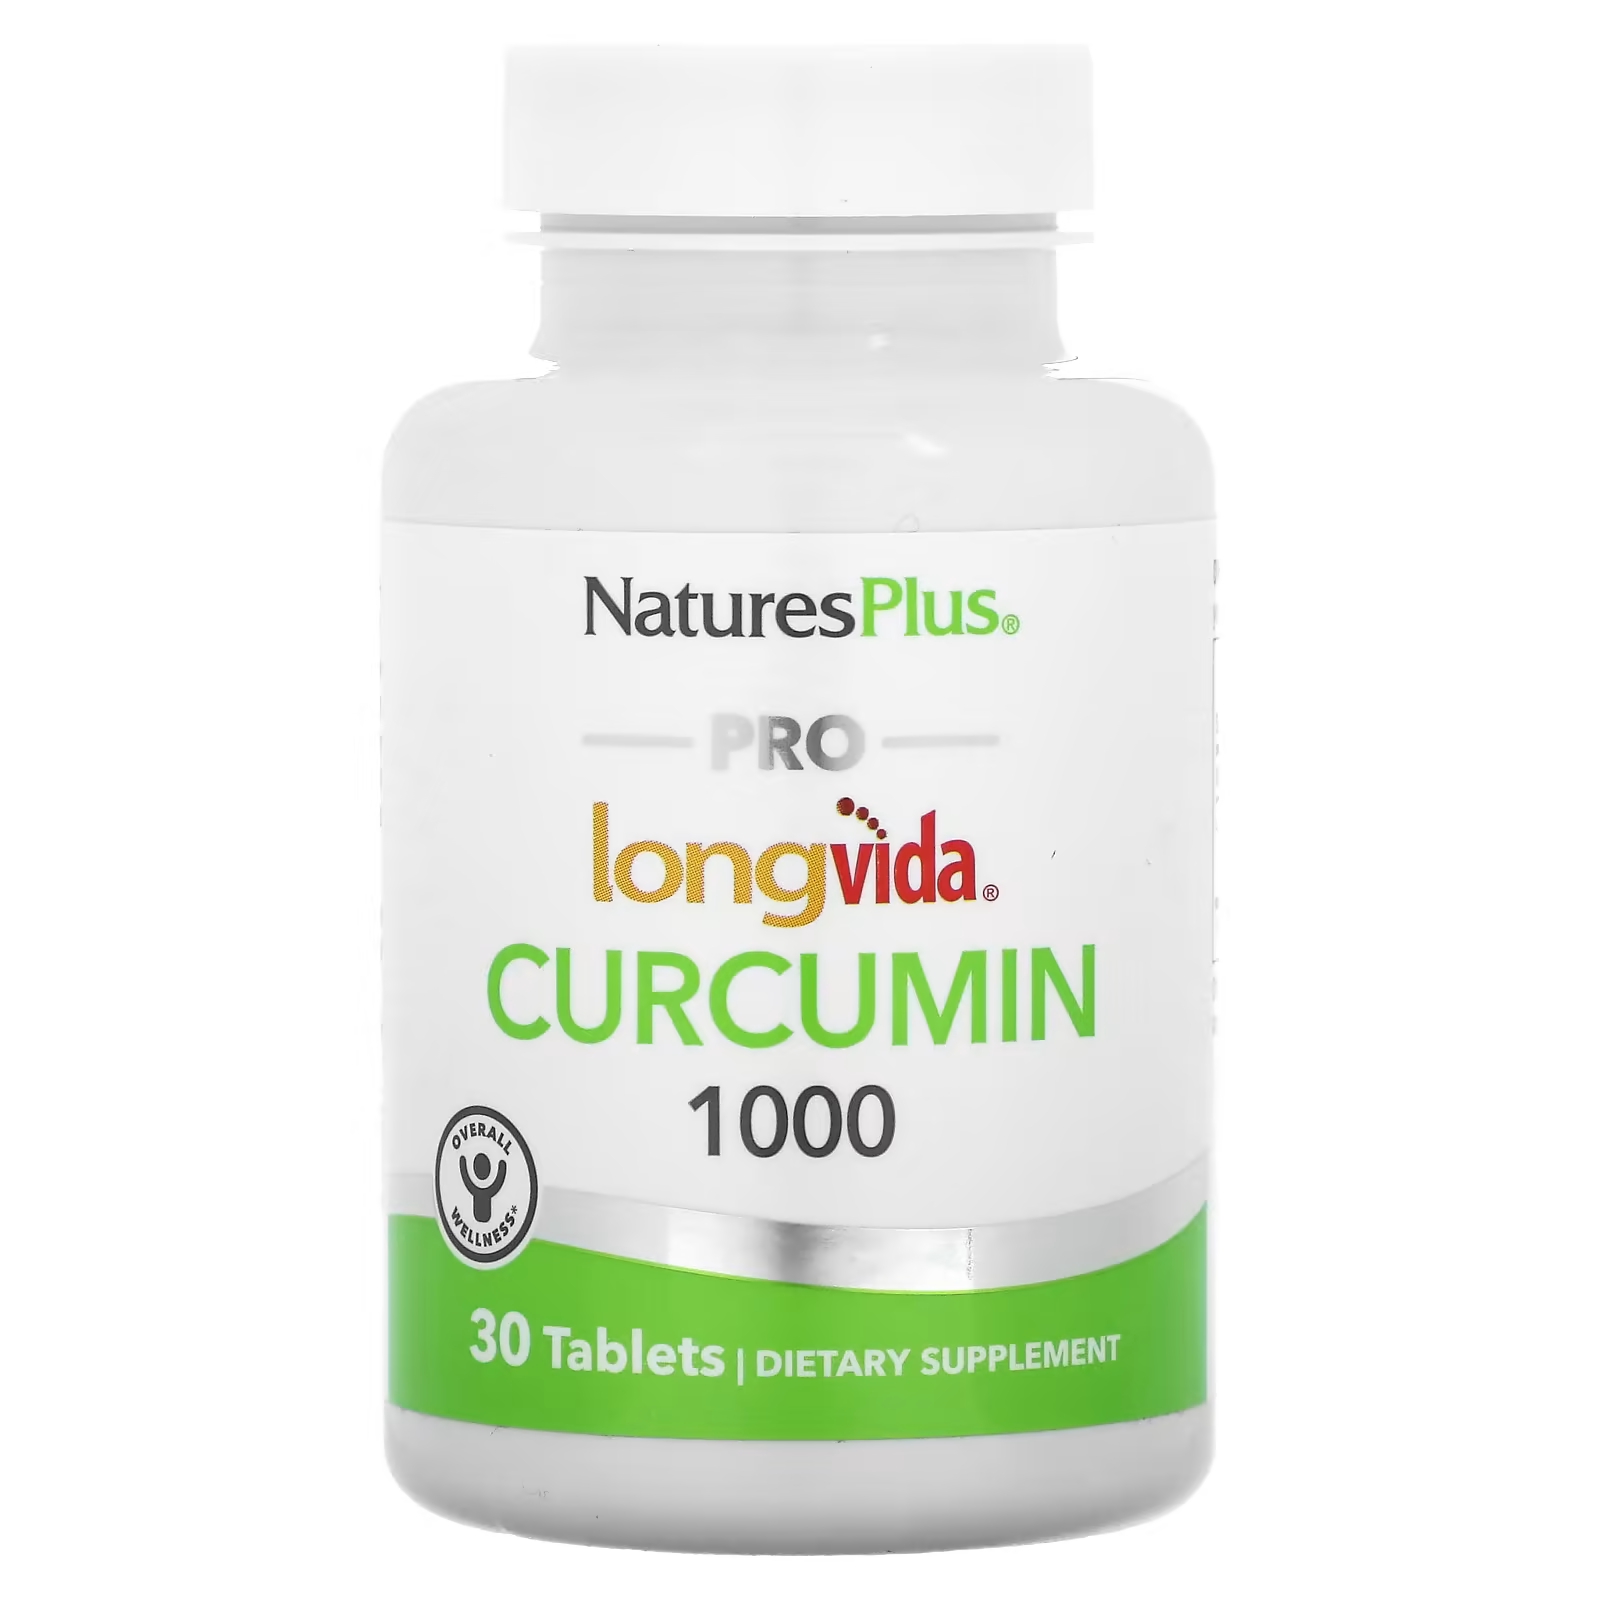 Пищевая добавка NaturesPlus Pro Longvida Куркумин, 30 таблеток naturesplus pro longvida куркумин 1000 60 таблеток